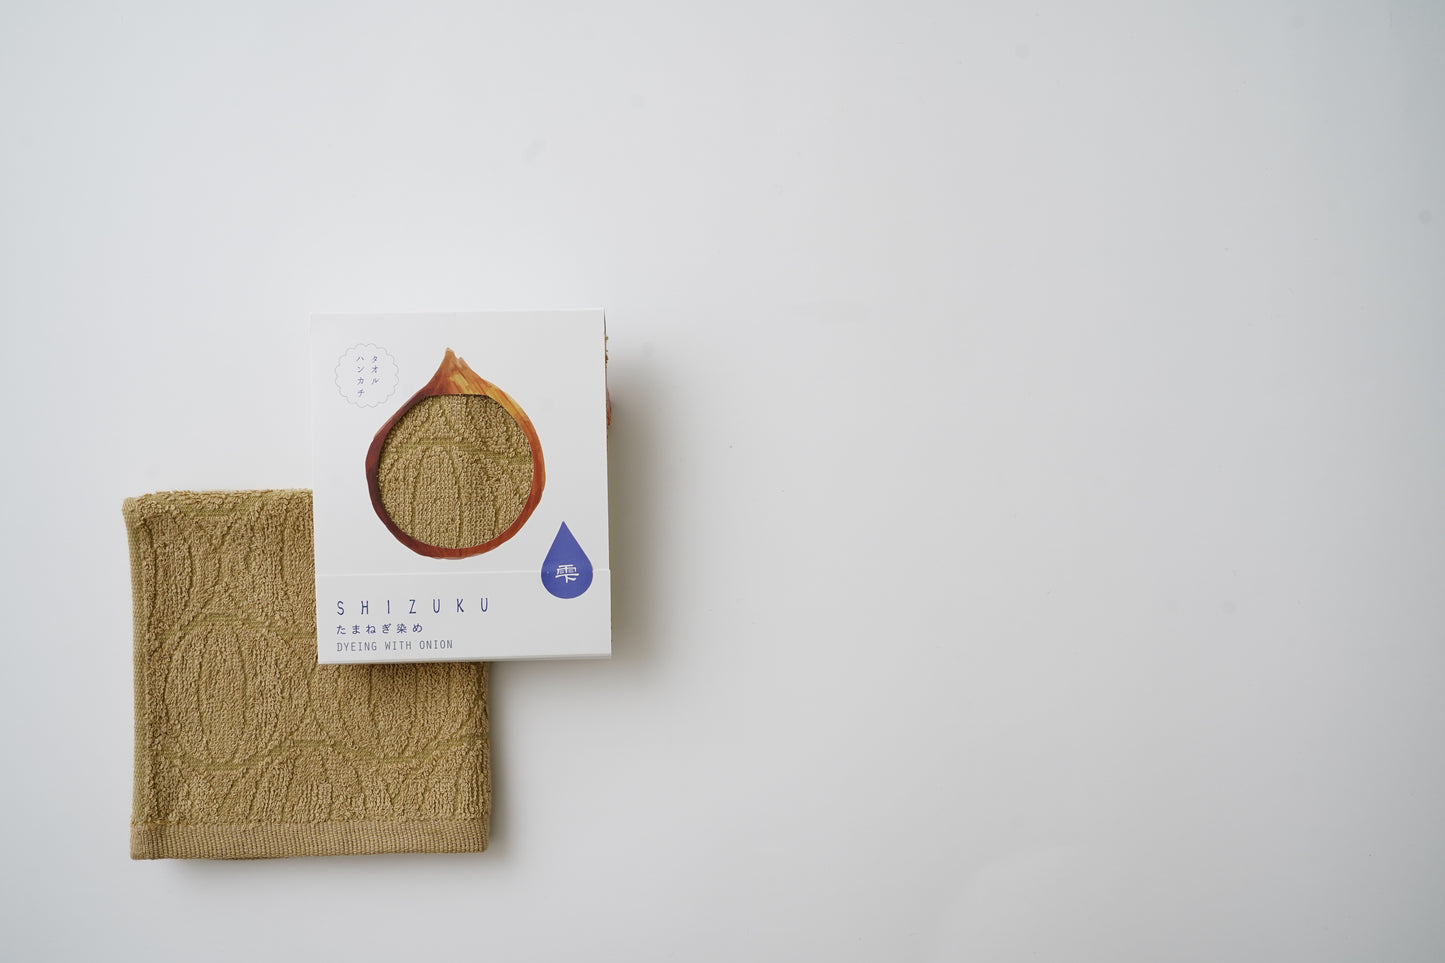 thies 1856 ® x Fukuroya Shizuku Handkerchief Pocket Towel natural dyed brown onion